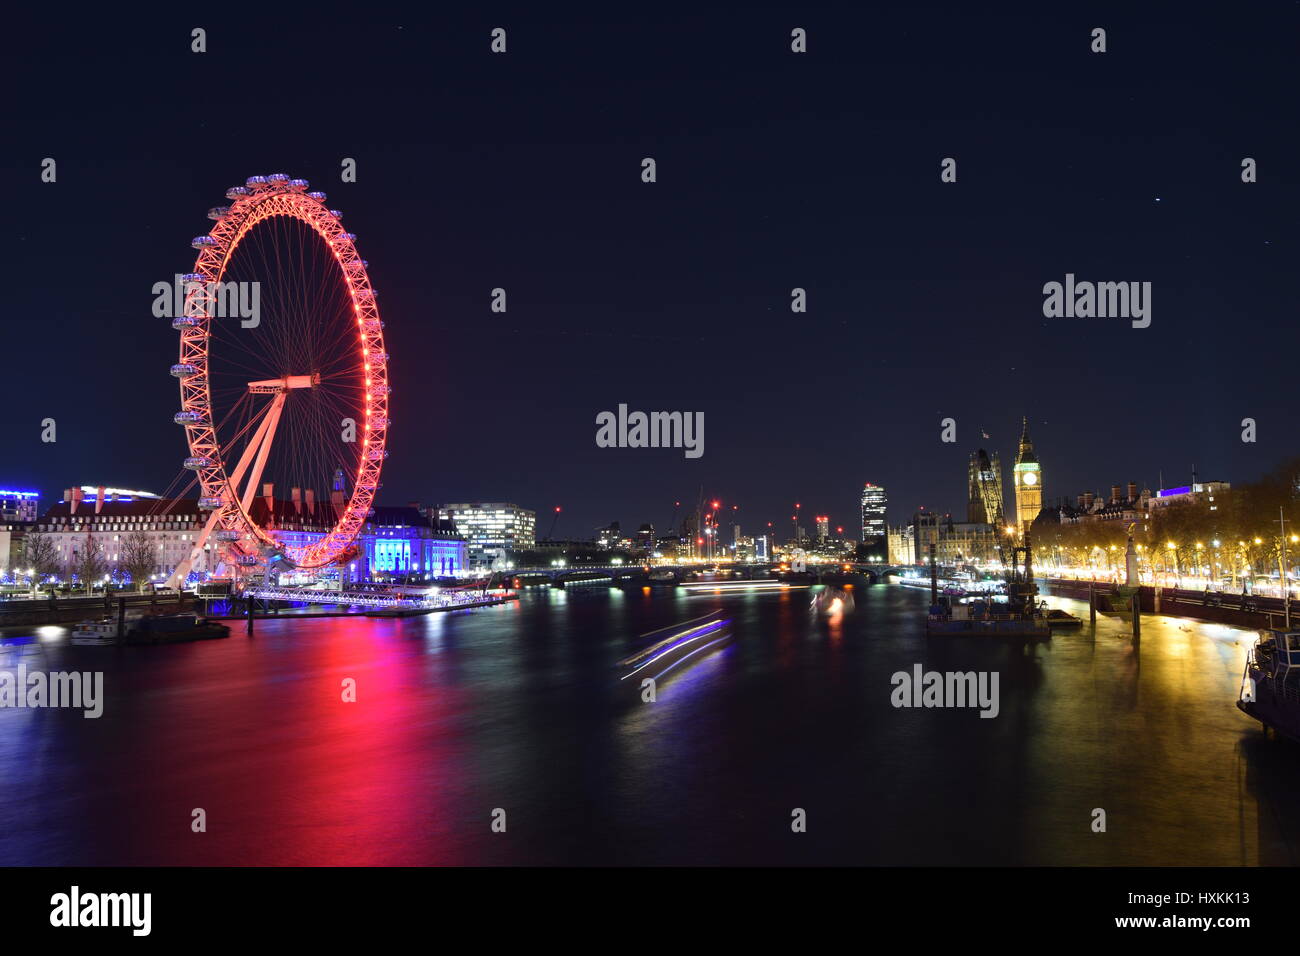 London Eye at night Stock Photo